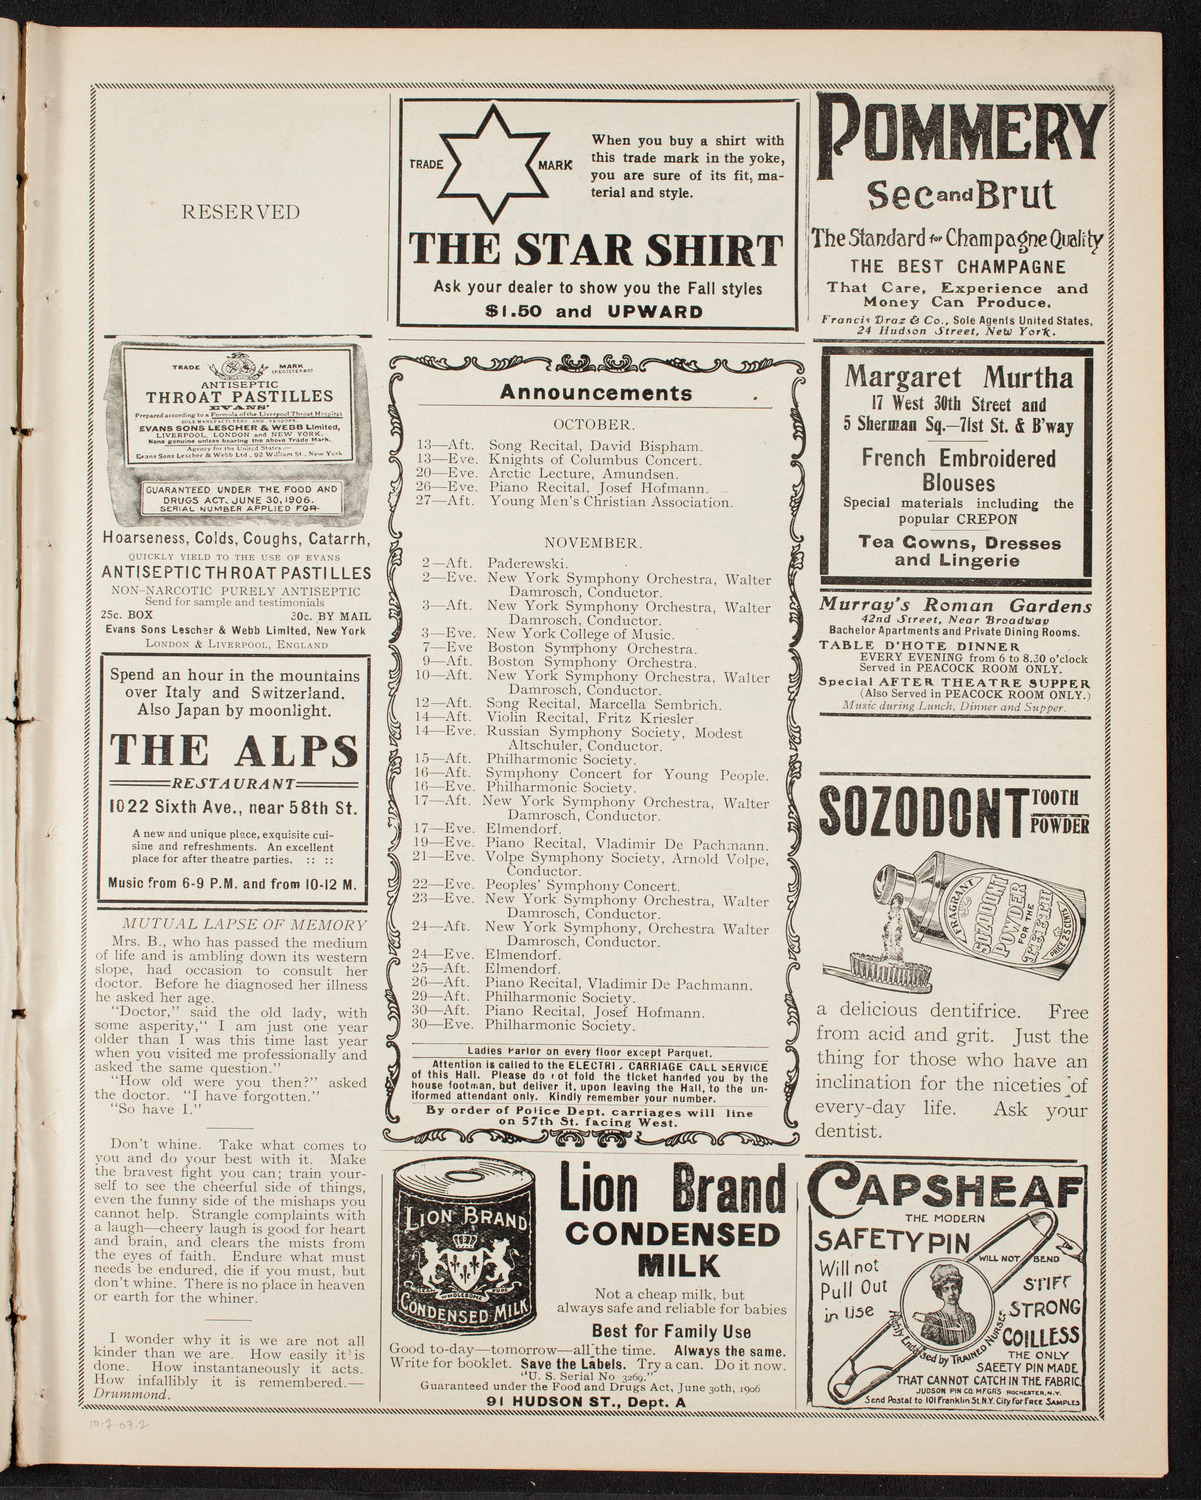 Rhondda Valley Male Concert Party, October 7, 1907, program page 3